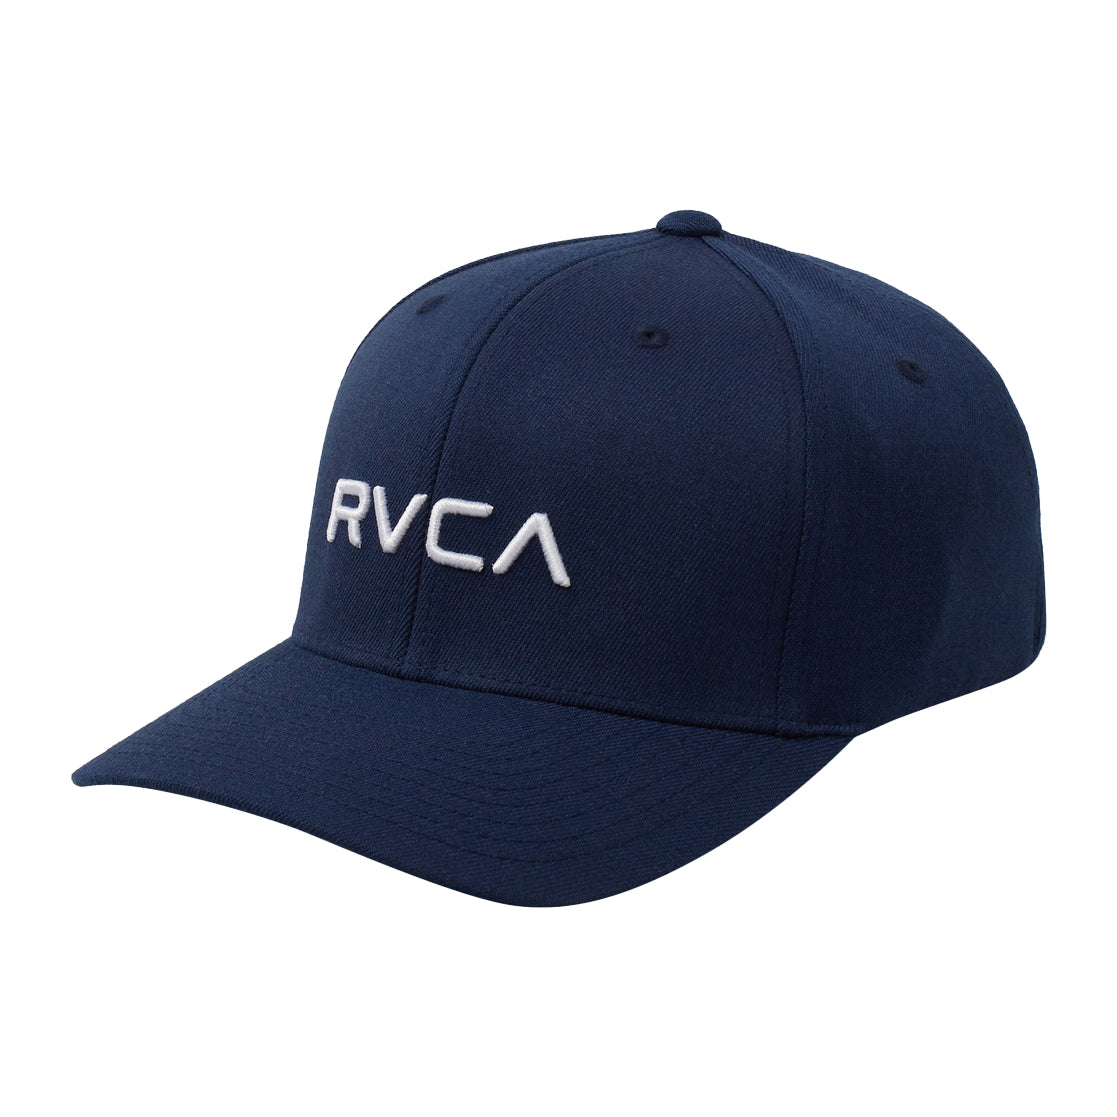 RVCA Flex Fit Hat 2022 NVY S/M